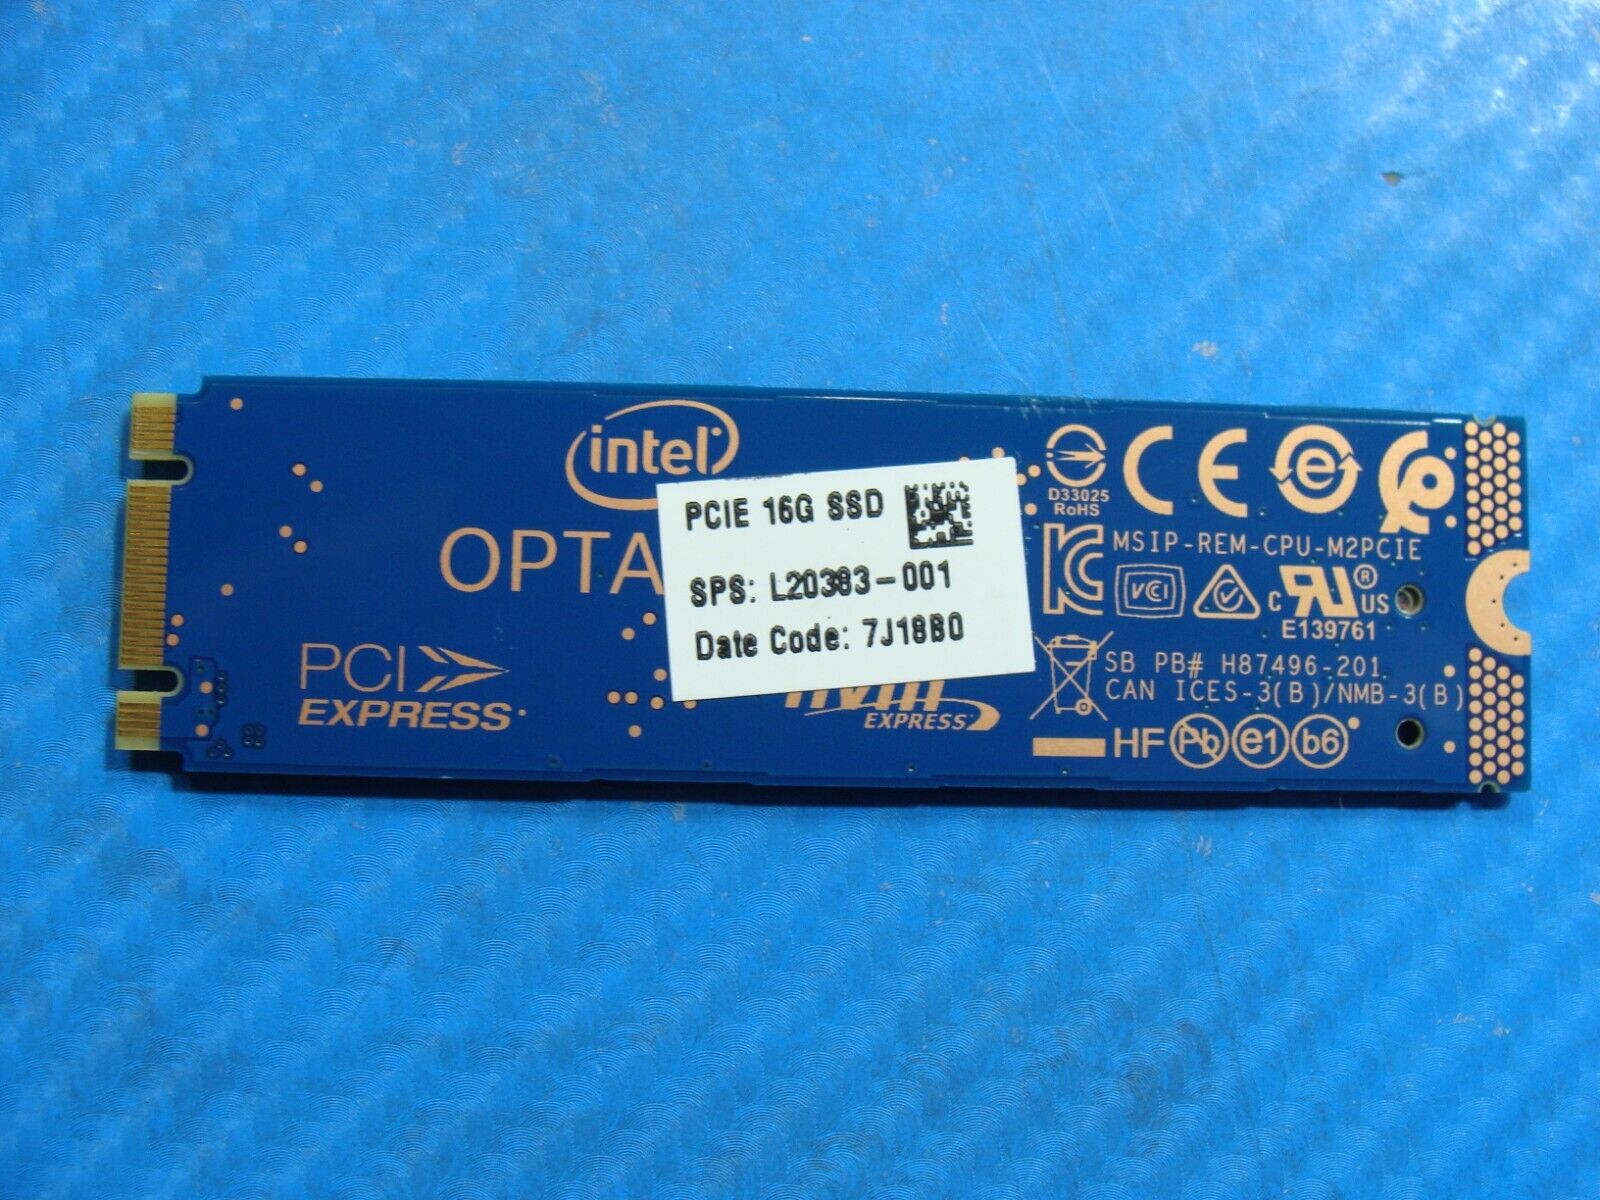 HP 15-da0015cy Intel 16GB NVMe M.2 SSD Solid State Drive MEMPEK1J016GAH